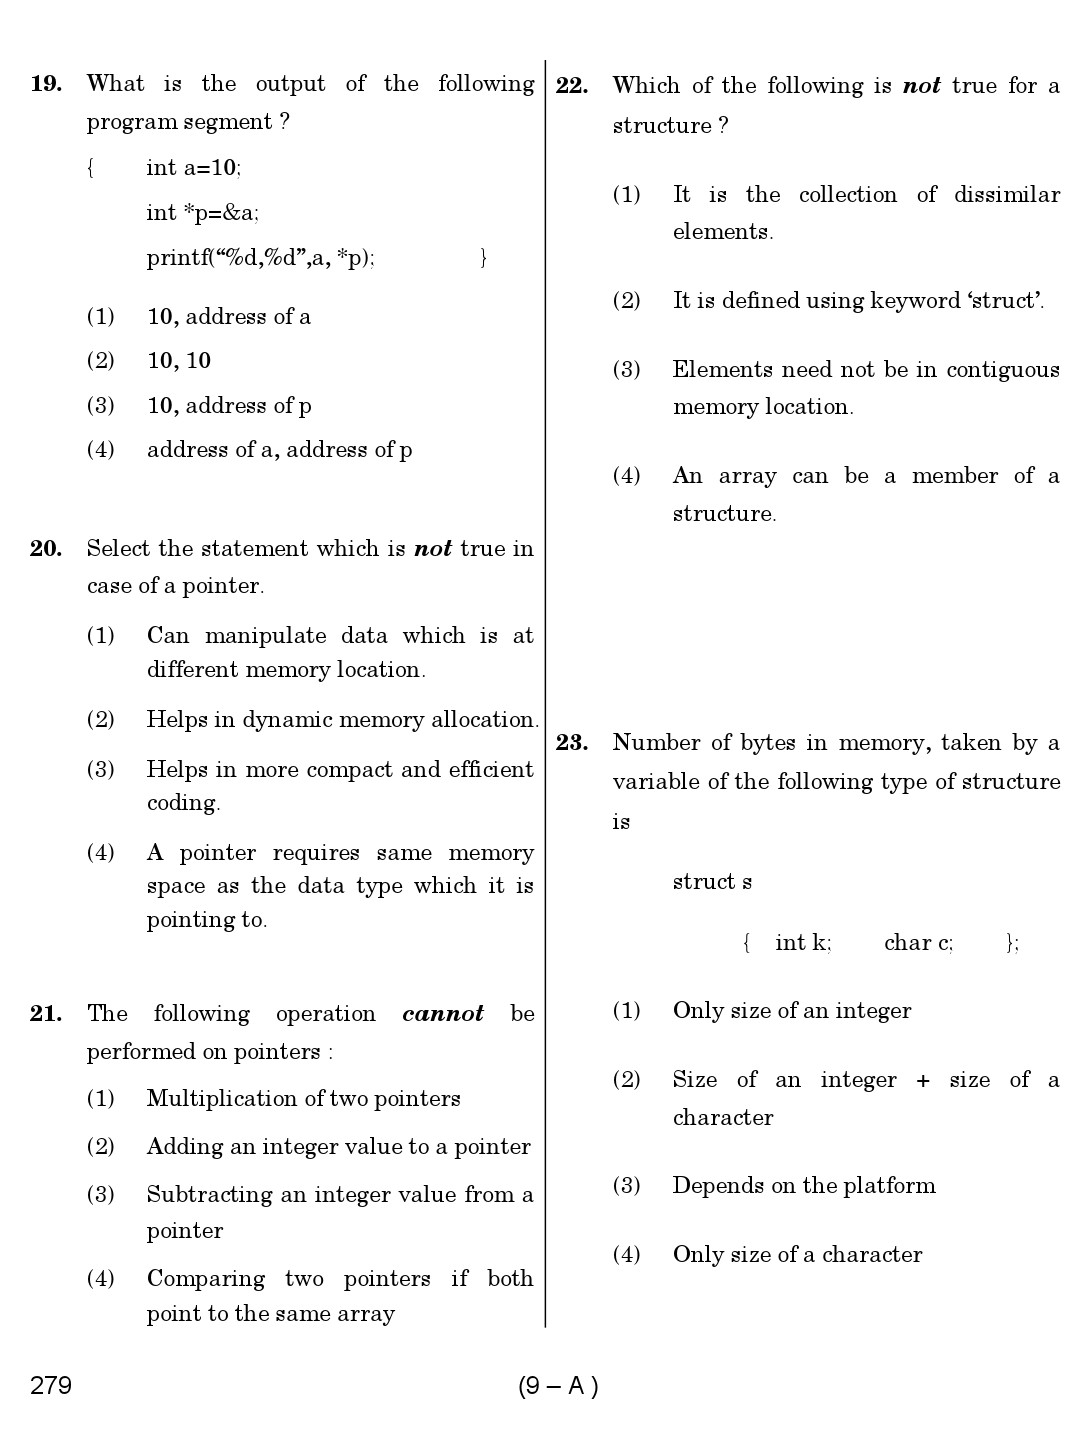 Karnataka PSC Computer Science Teachers Exam Sample Question Paper Subject code 279 9